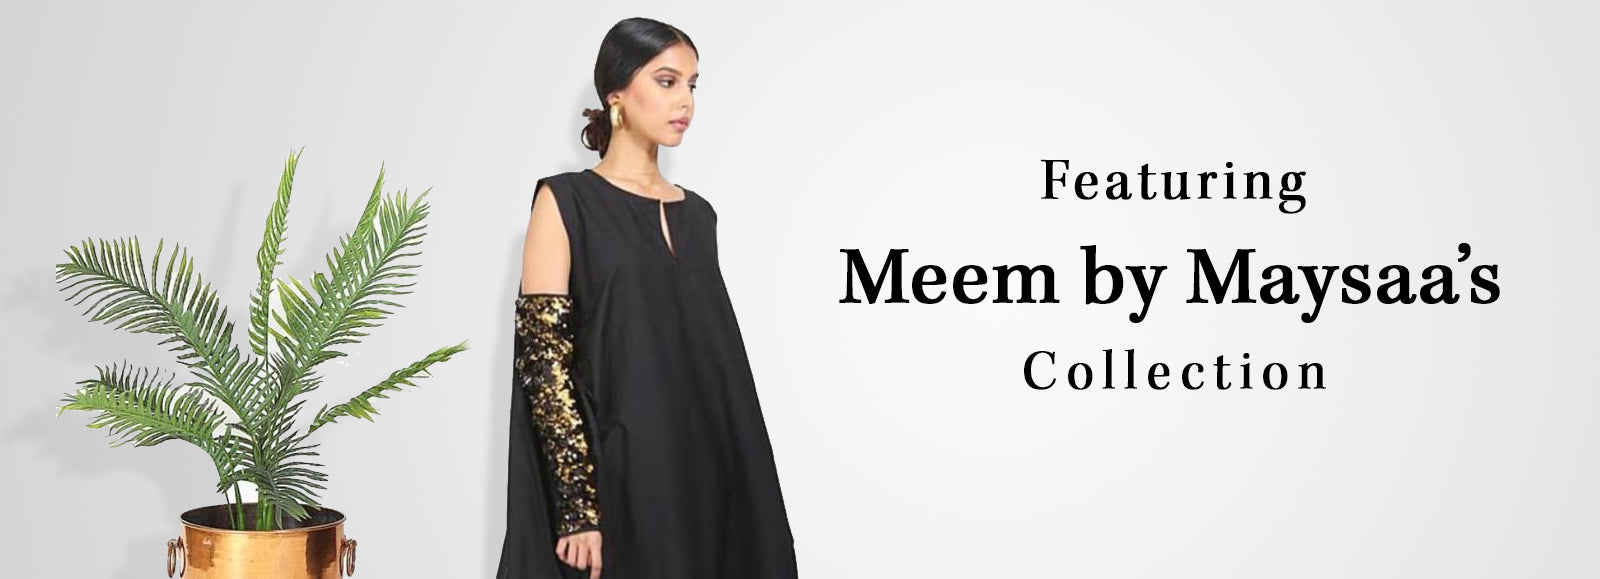 Meem by Maysaa